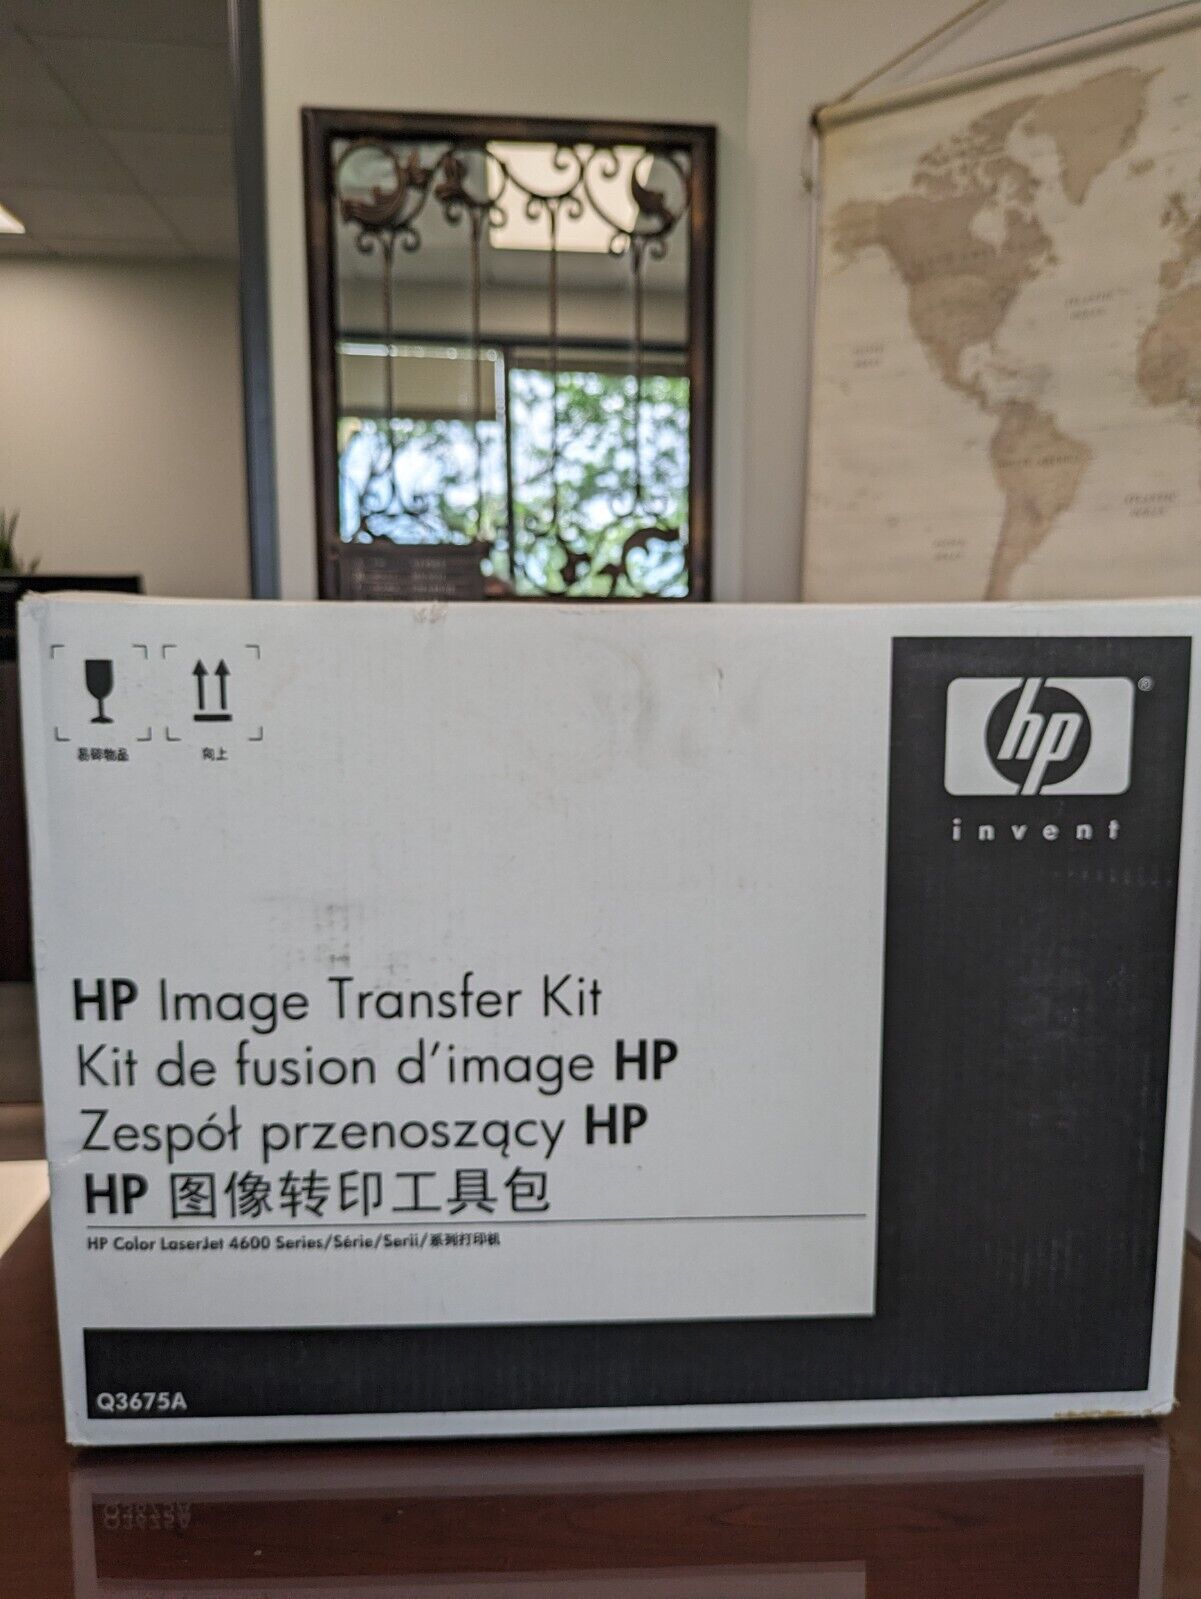 HP Q3675A Color Laser Jet 4600 4650 Image Transfer Kit NEW Sealed Box